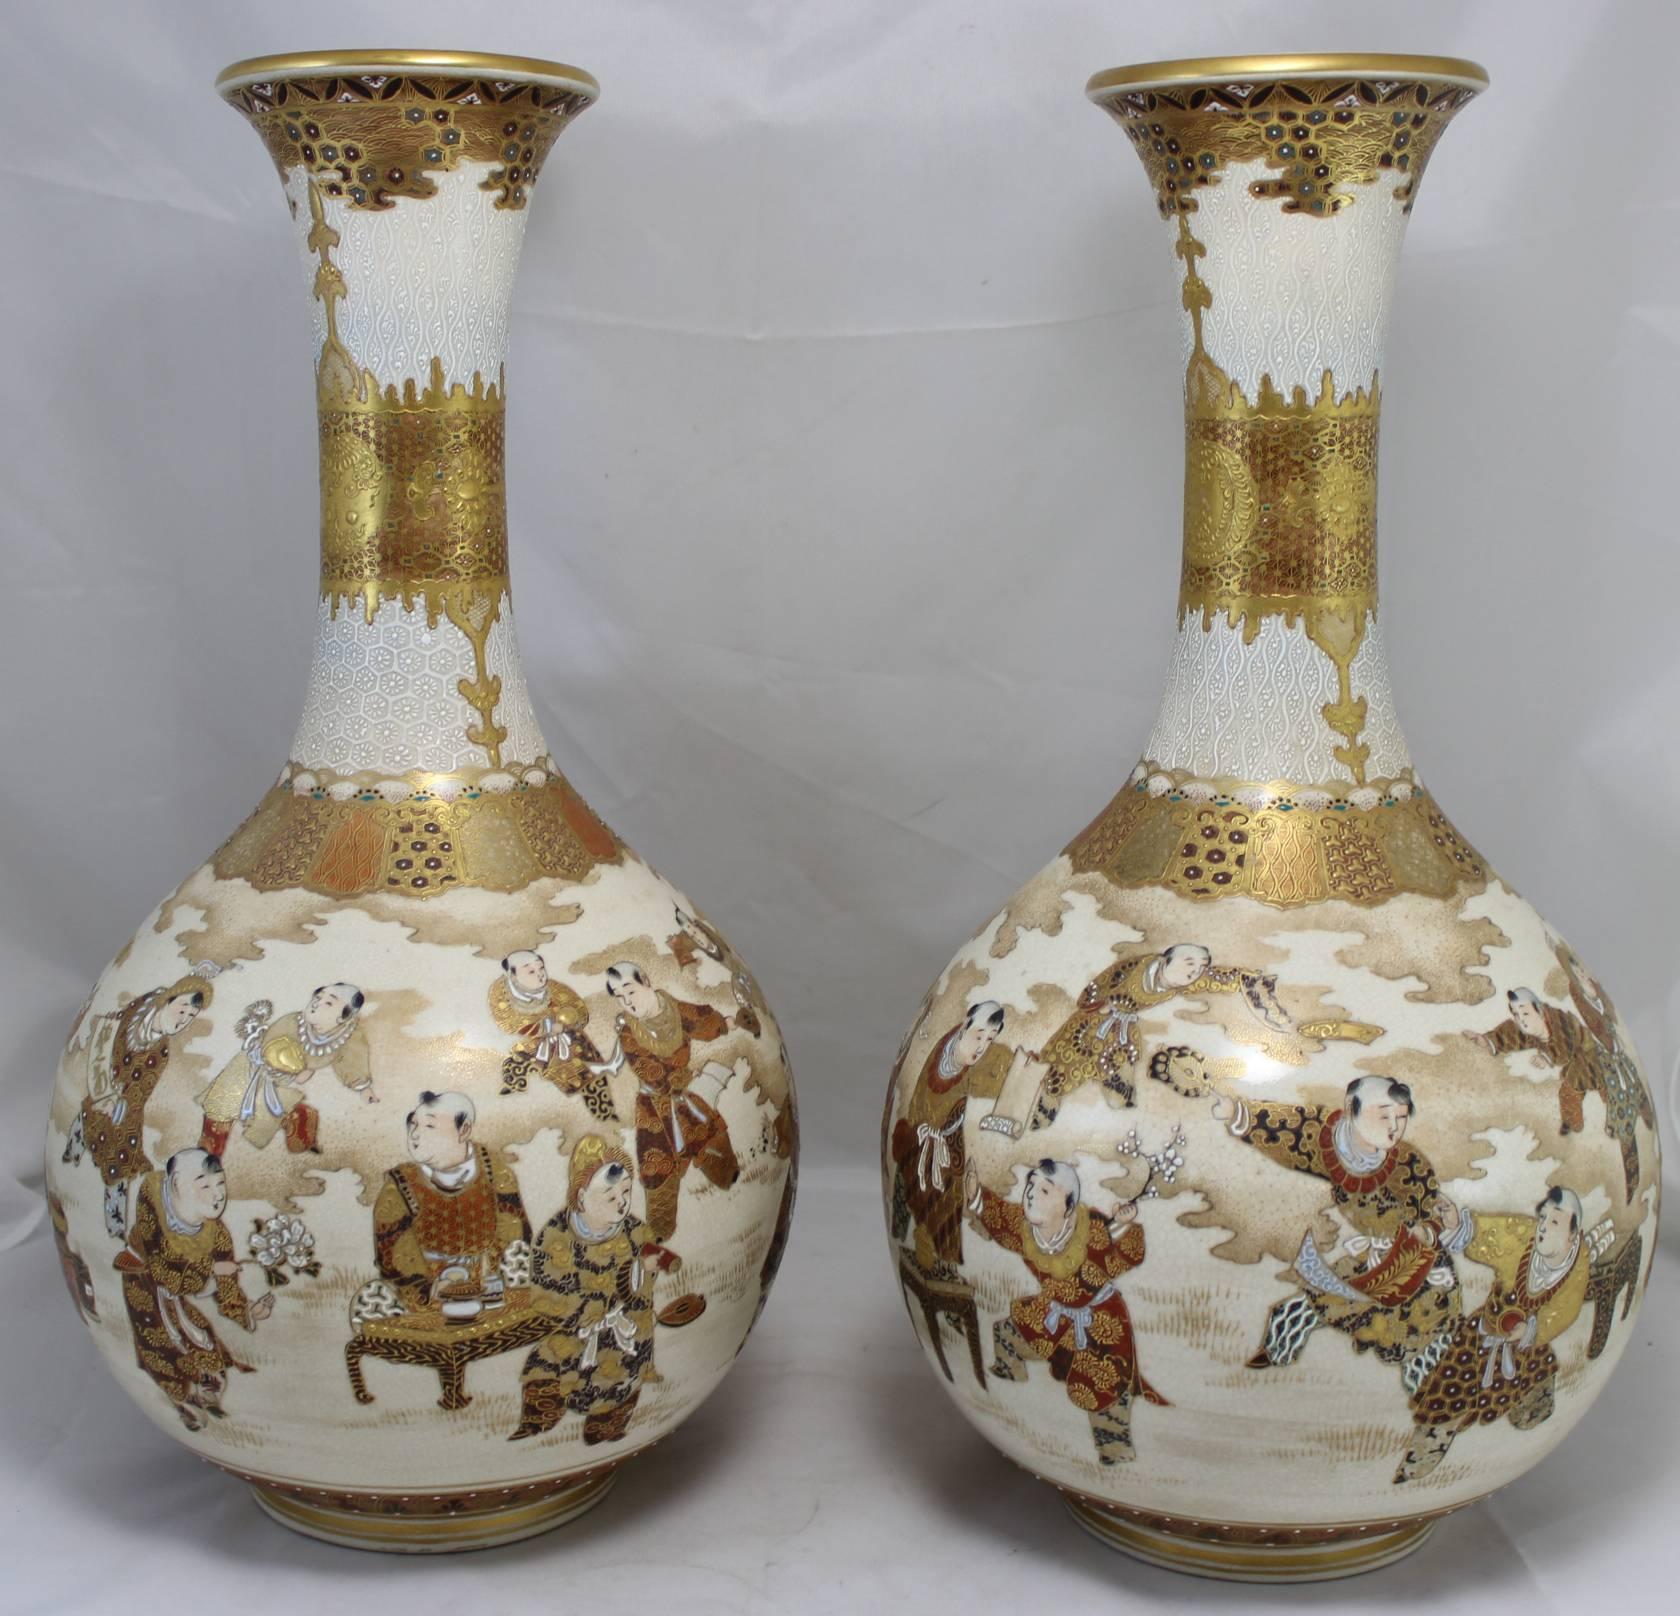 Enameled Pair of Late 19th Century Japanese Satsuma Vases with Figural Decoration